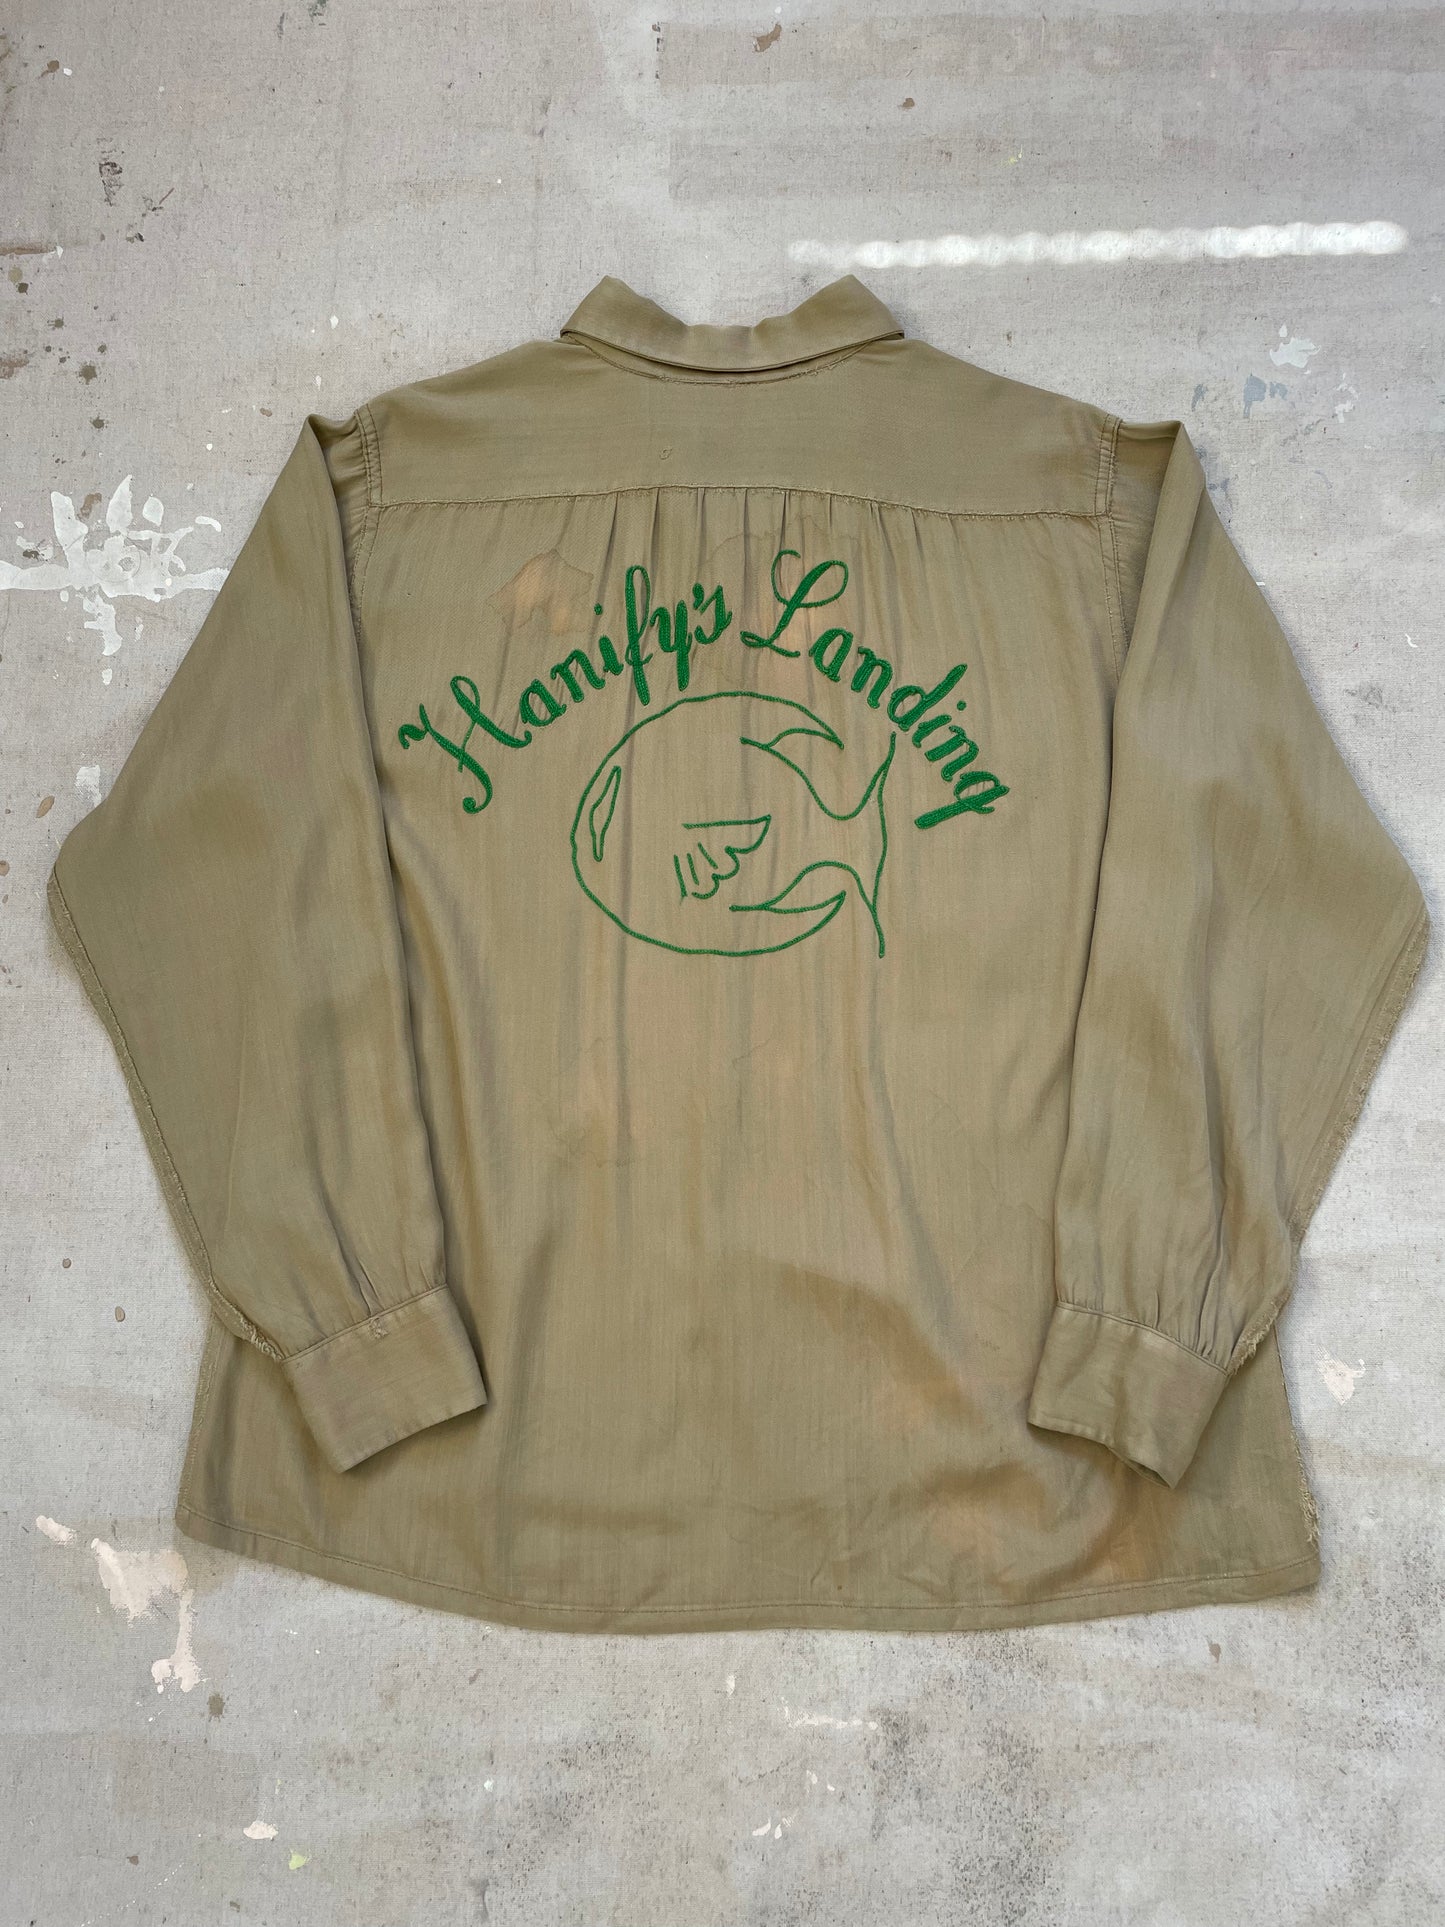 Hanify’s Landing Bowling Shirt